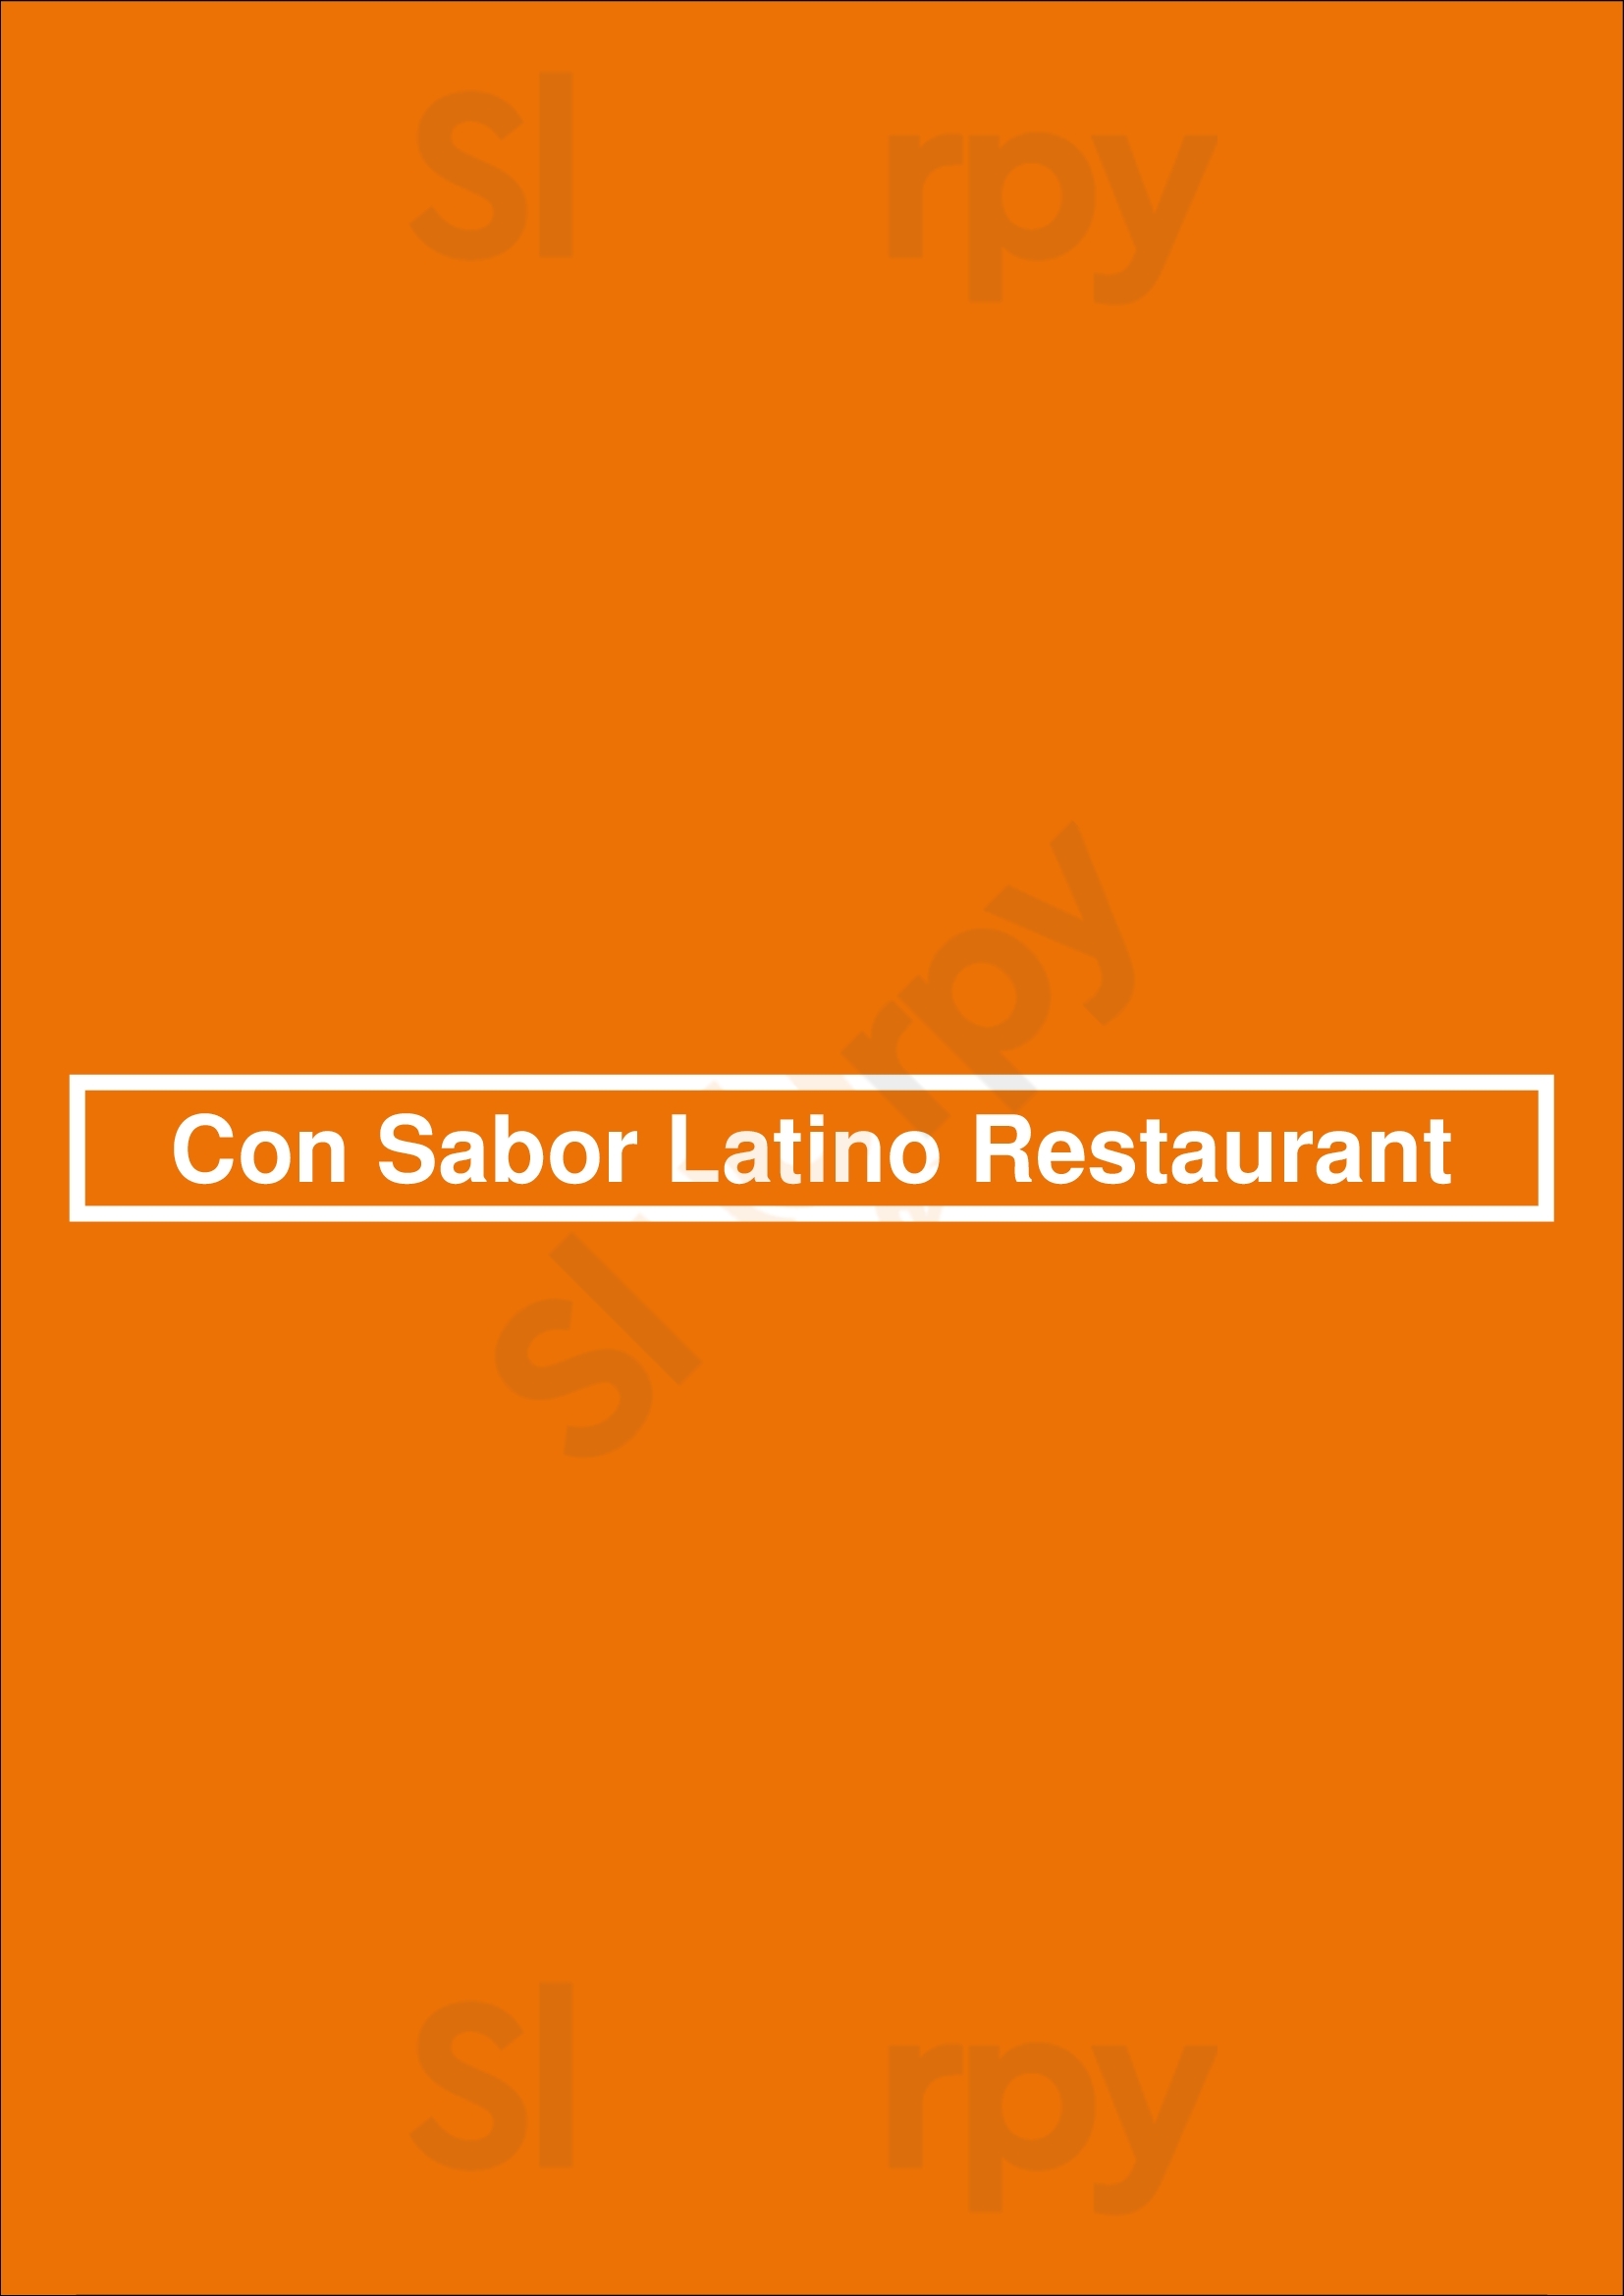 Con Sabor Latino Restaurant Bronx Menu - 1